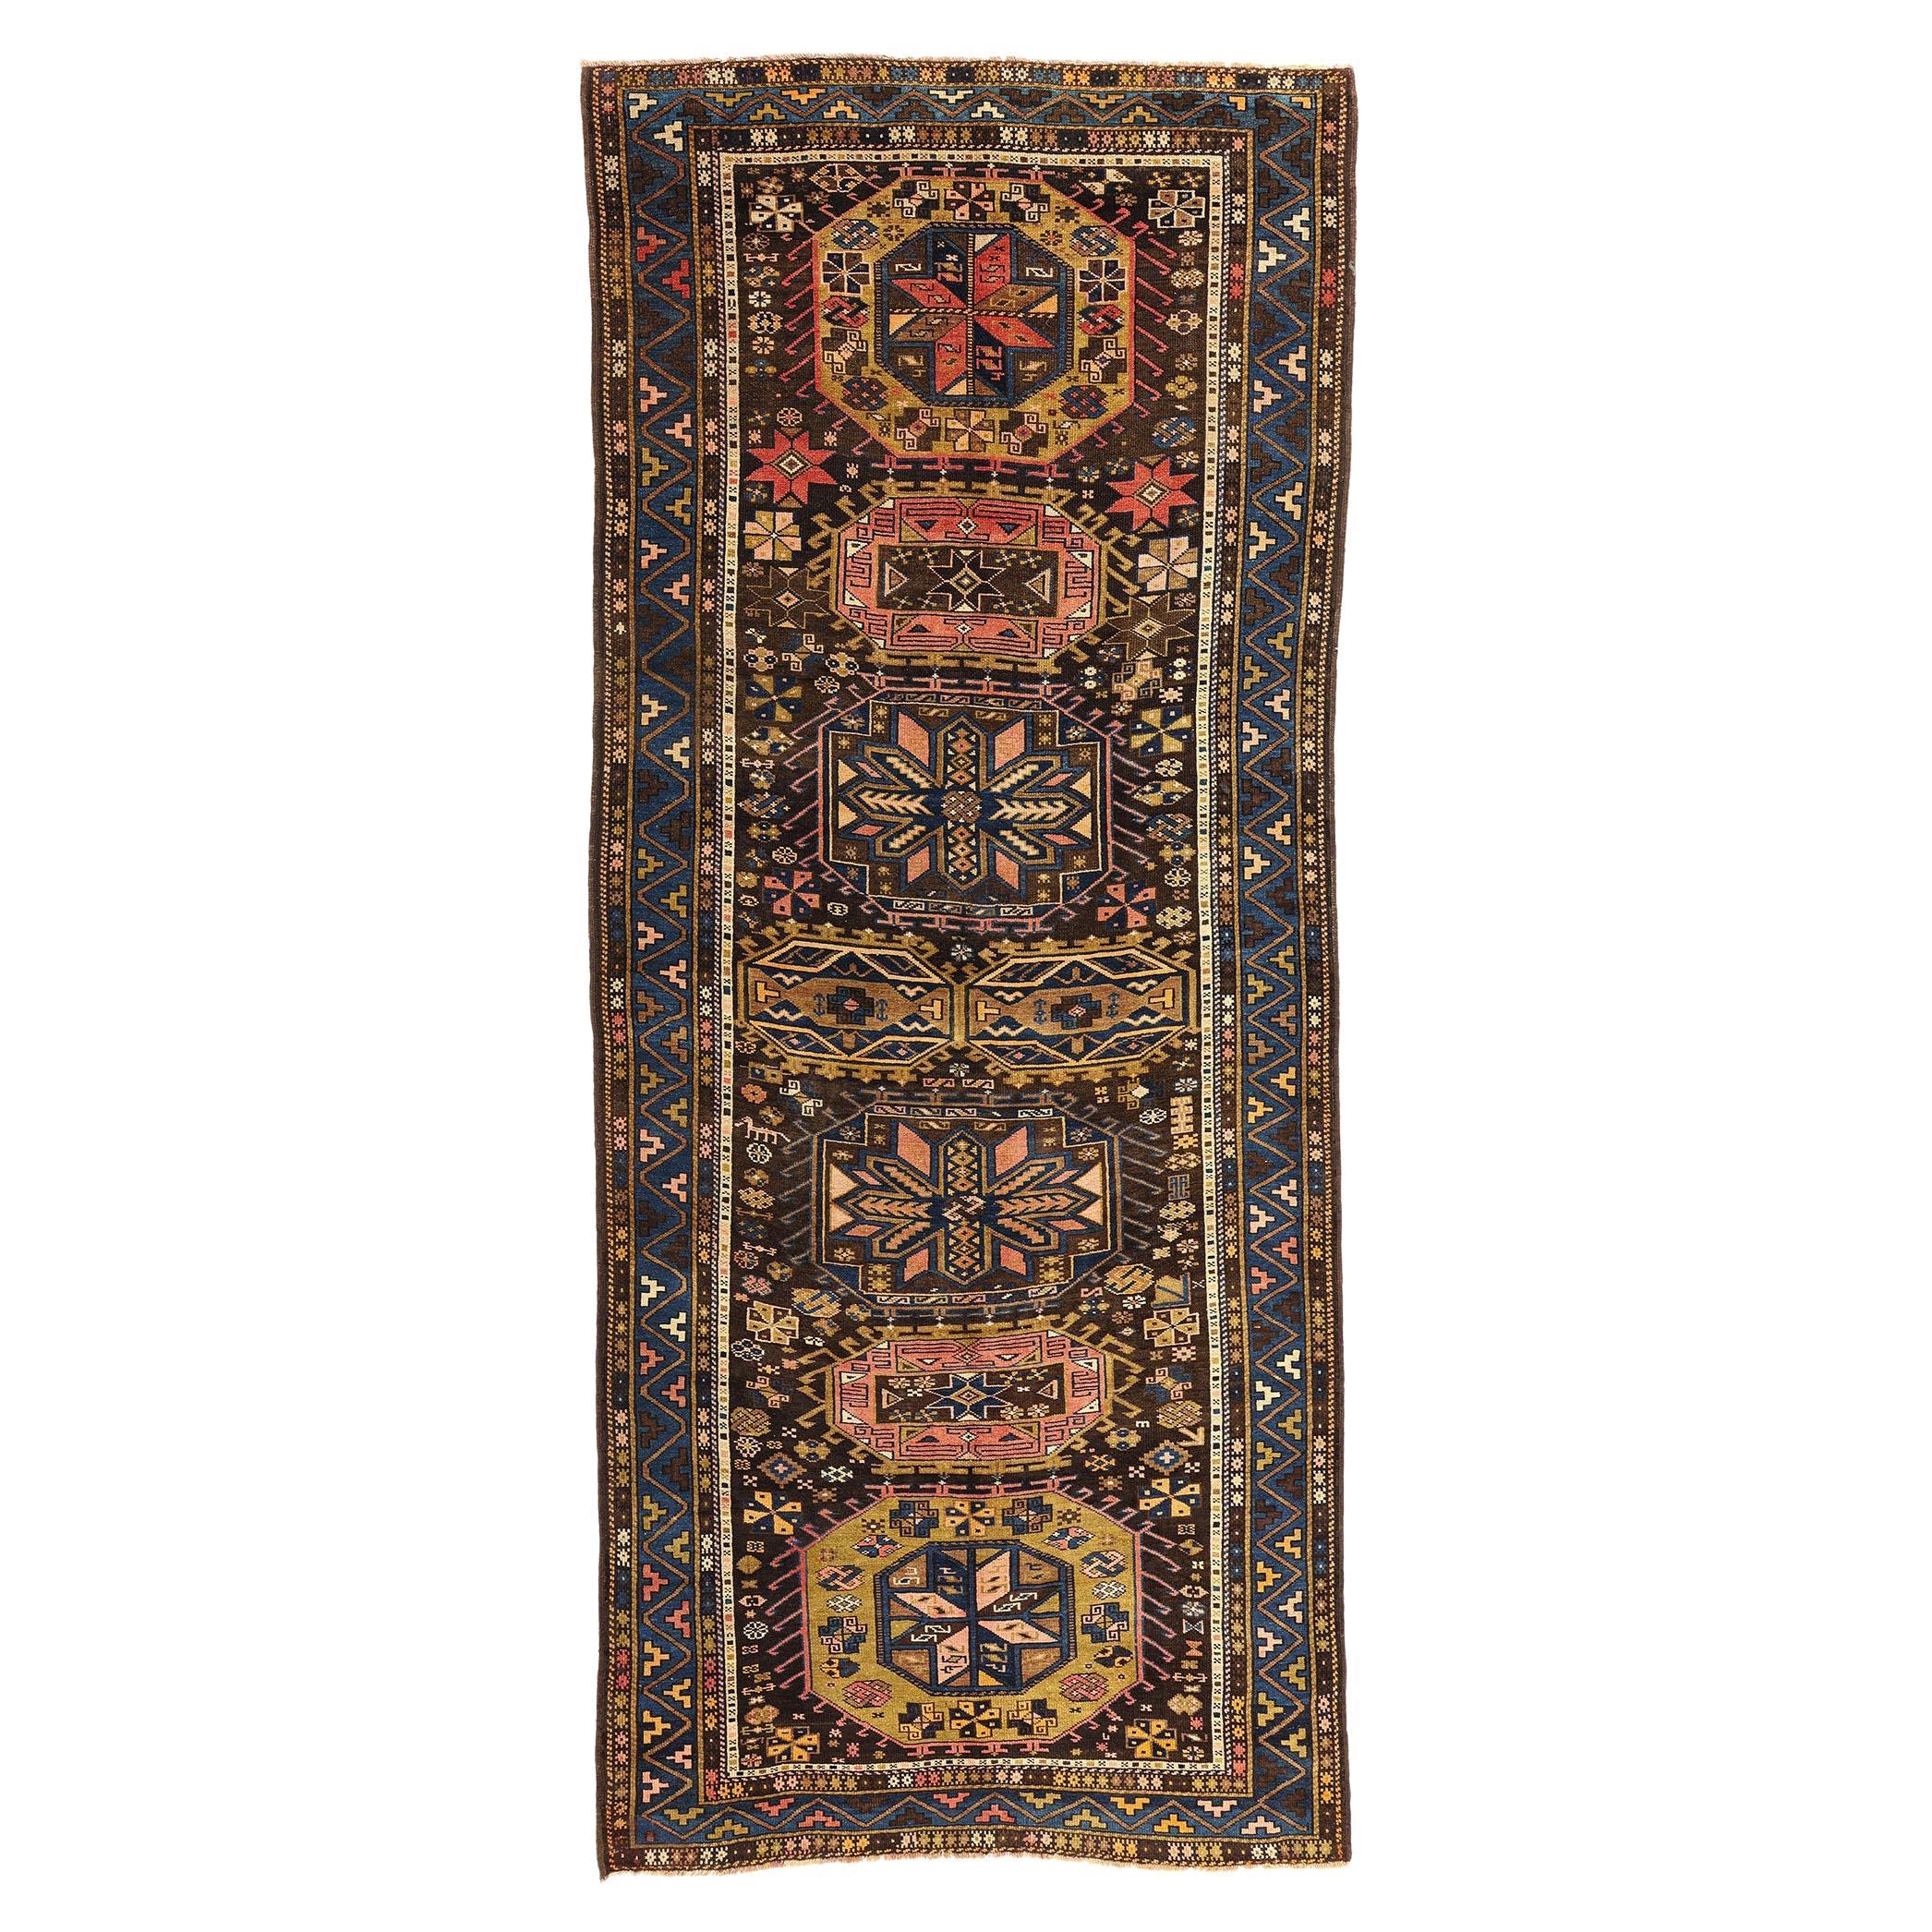 Late 19th Century Antique Caucasian Tribal Carpet For Sale